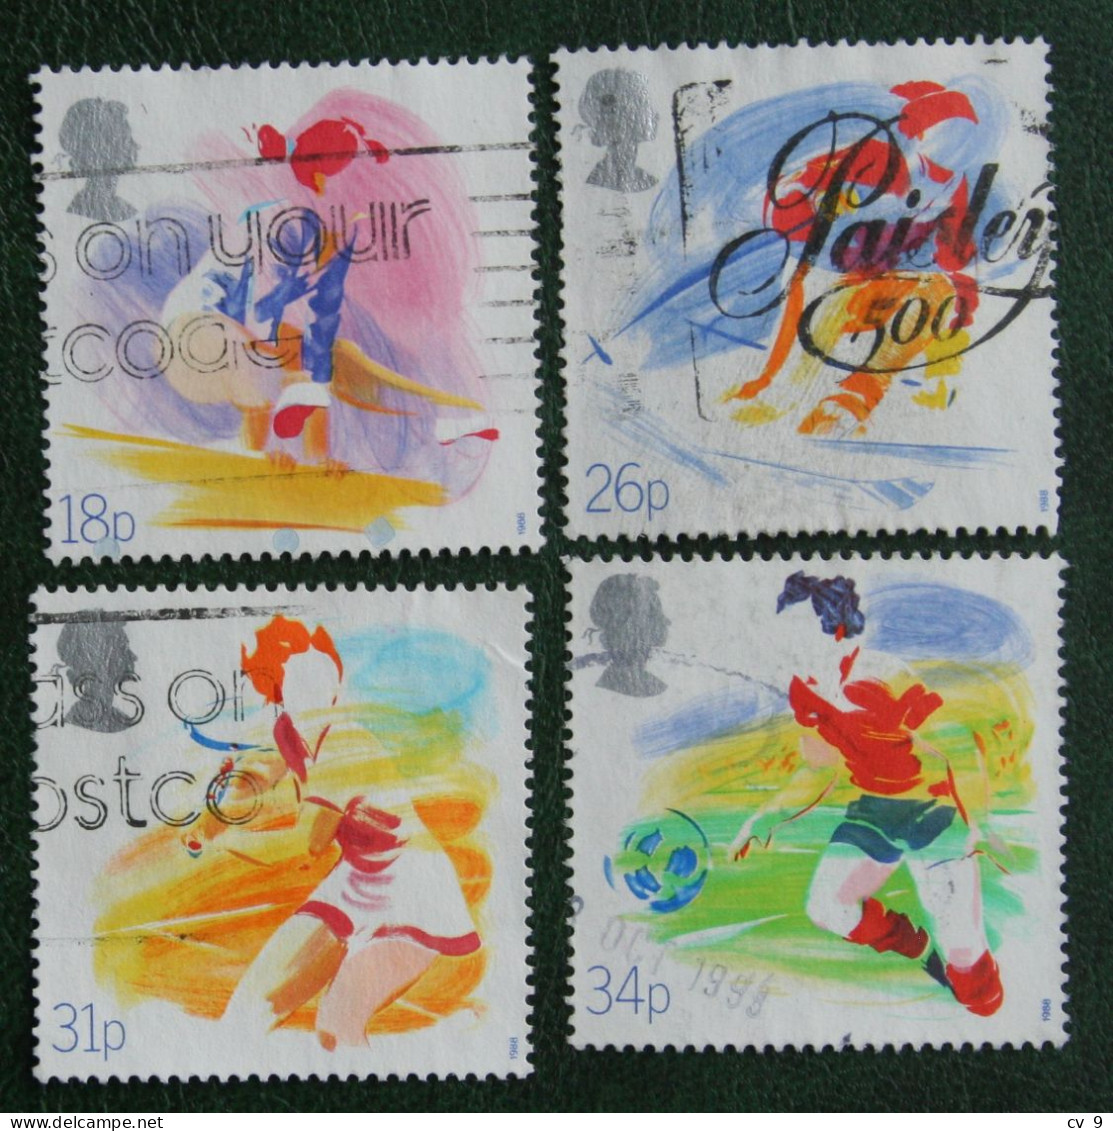 SPORT Ski Tennis Football Soccer (Mi 1143-1146) 1988 Used Gebruikt Oblitere ENGLAND GRANDE-BRETAGNE GB GREAT BRITAIN - Used Stamps